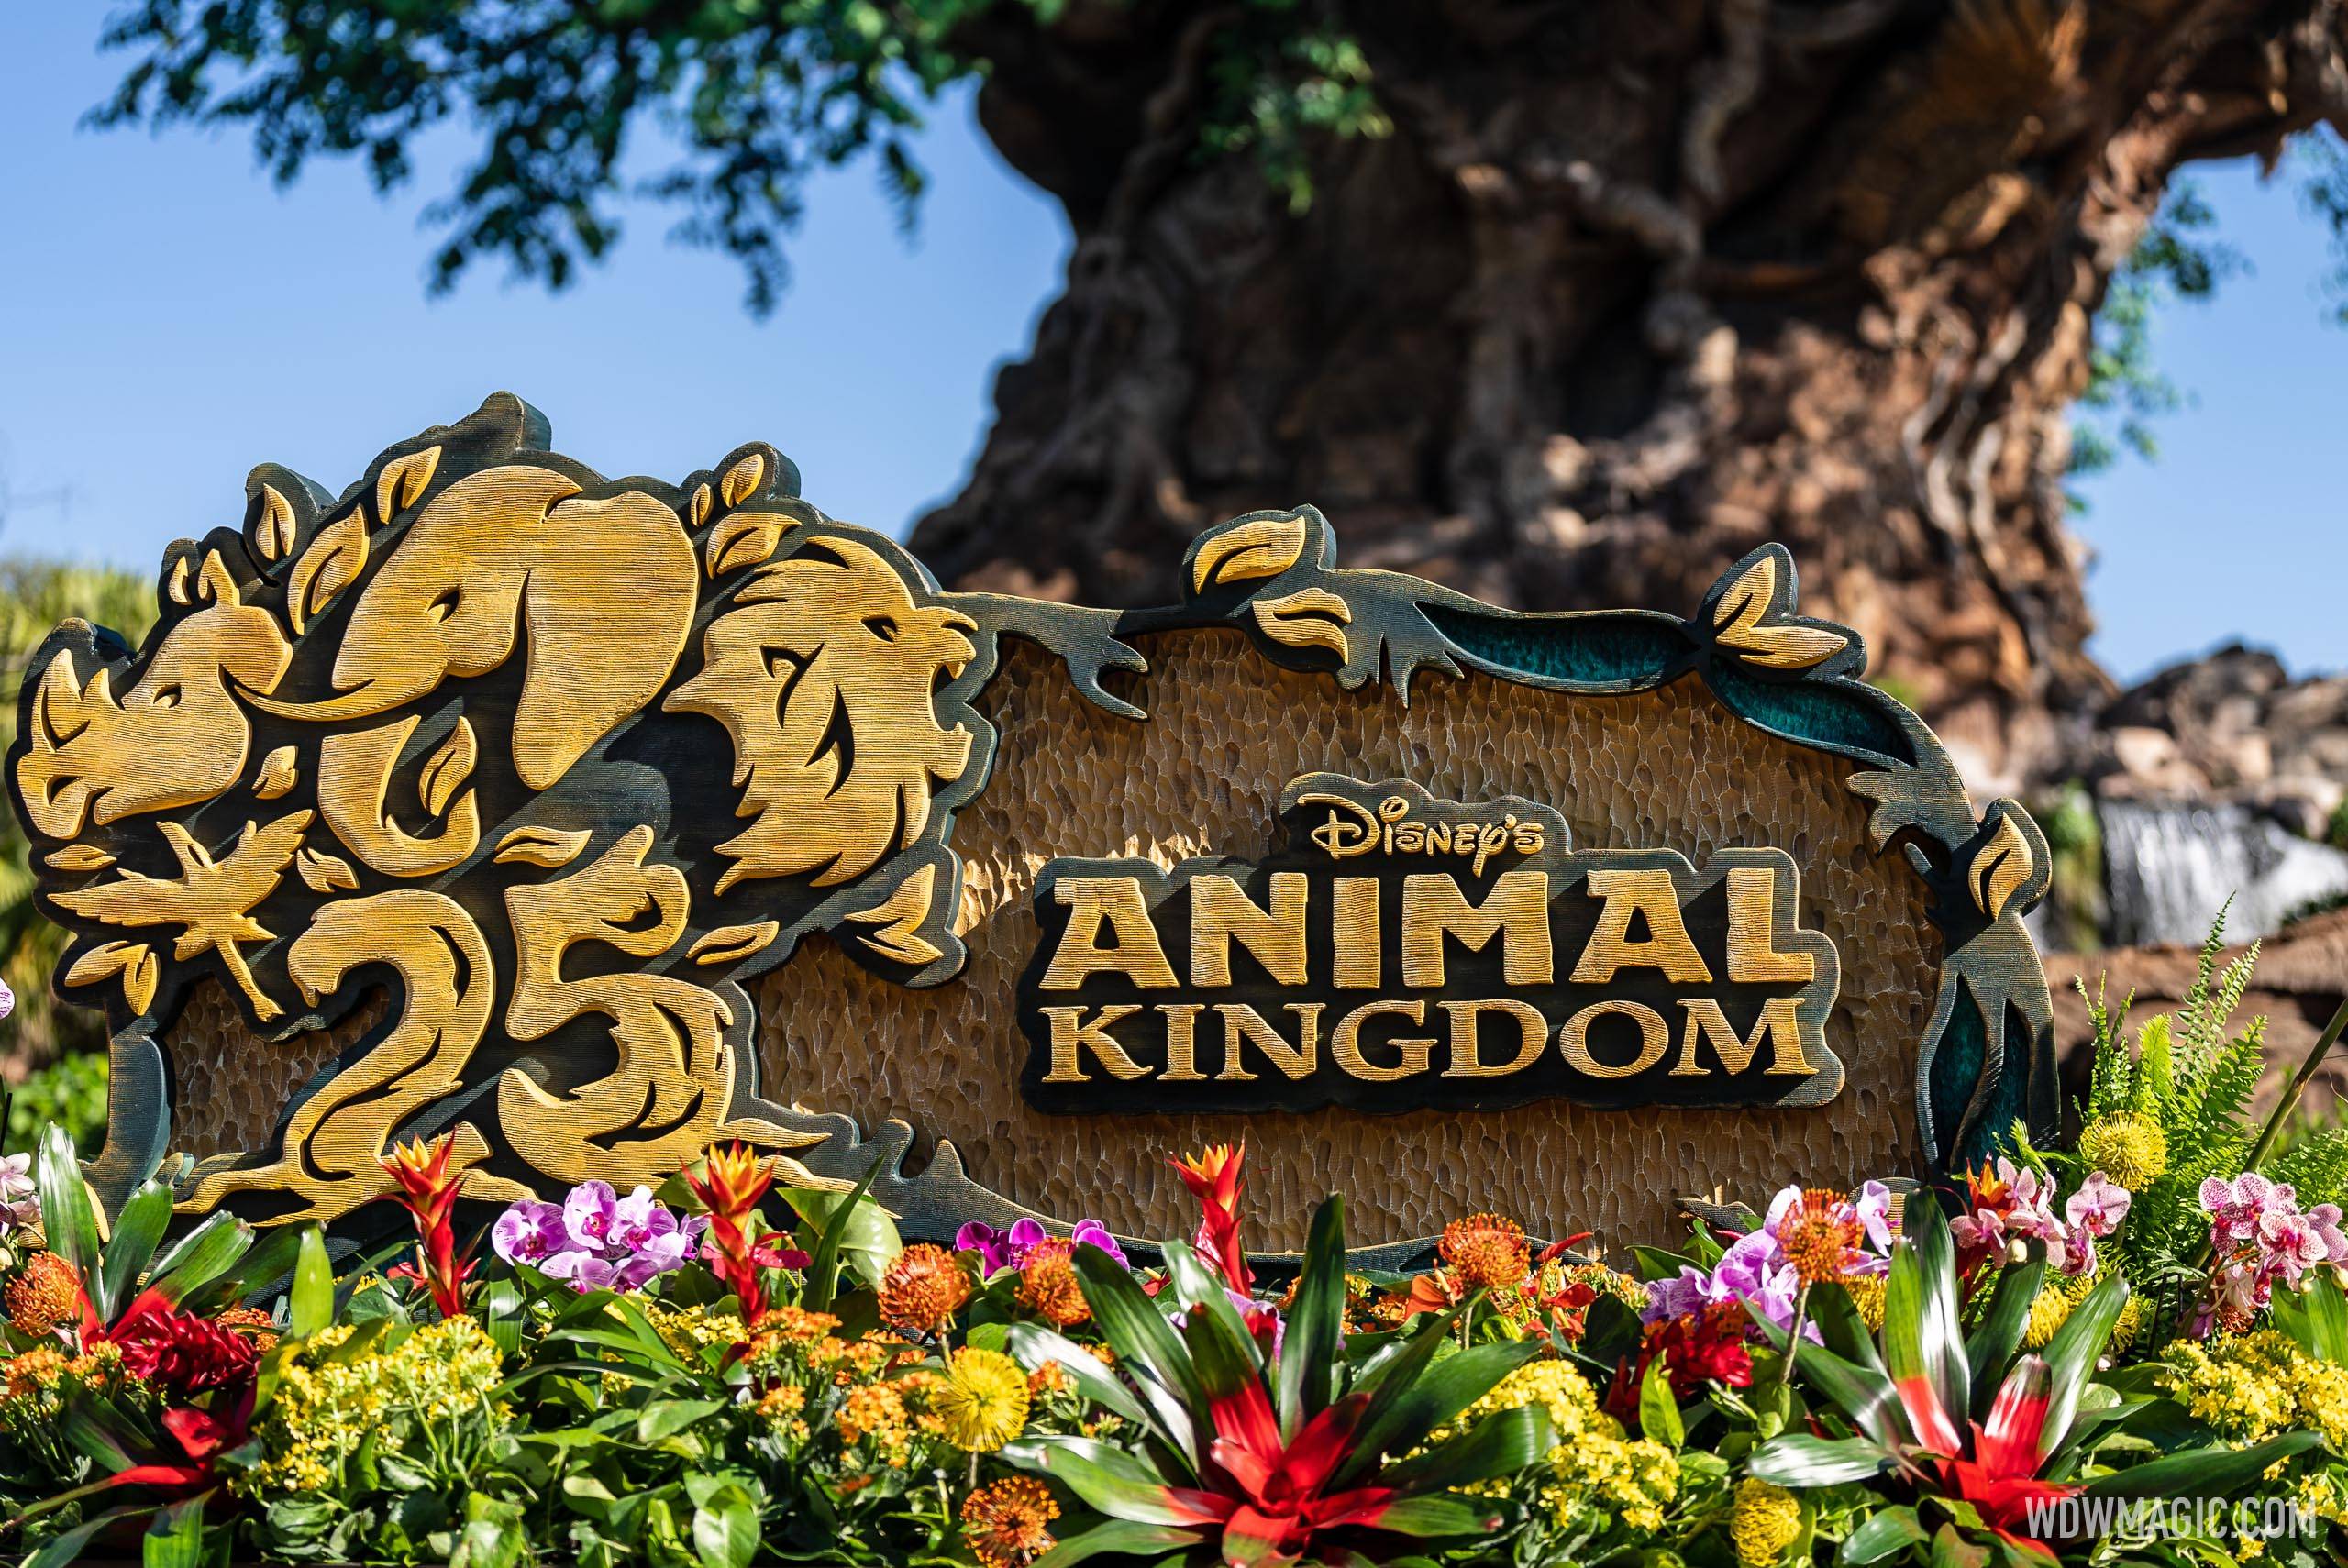 Disney's Animal Kingdom 25th anniversary